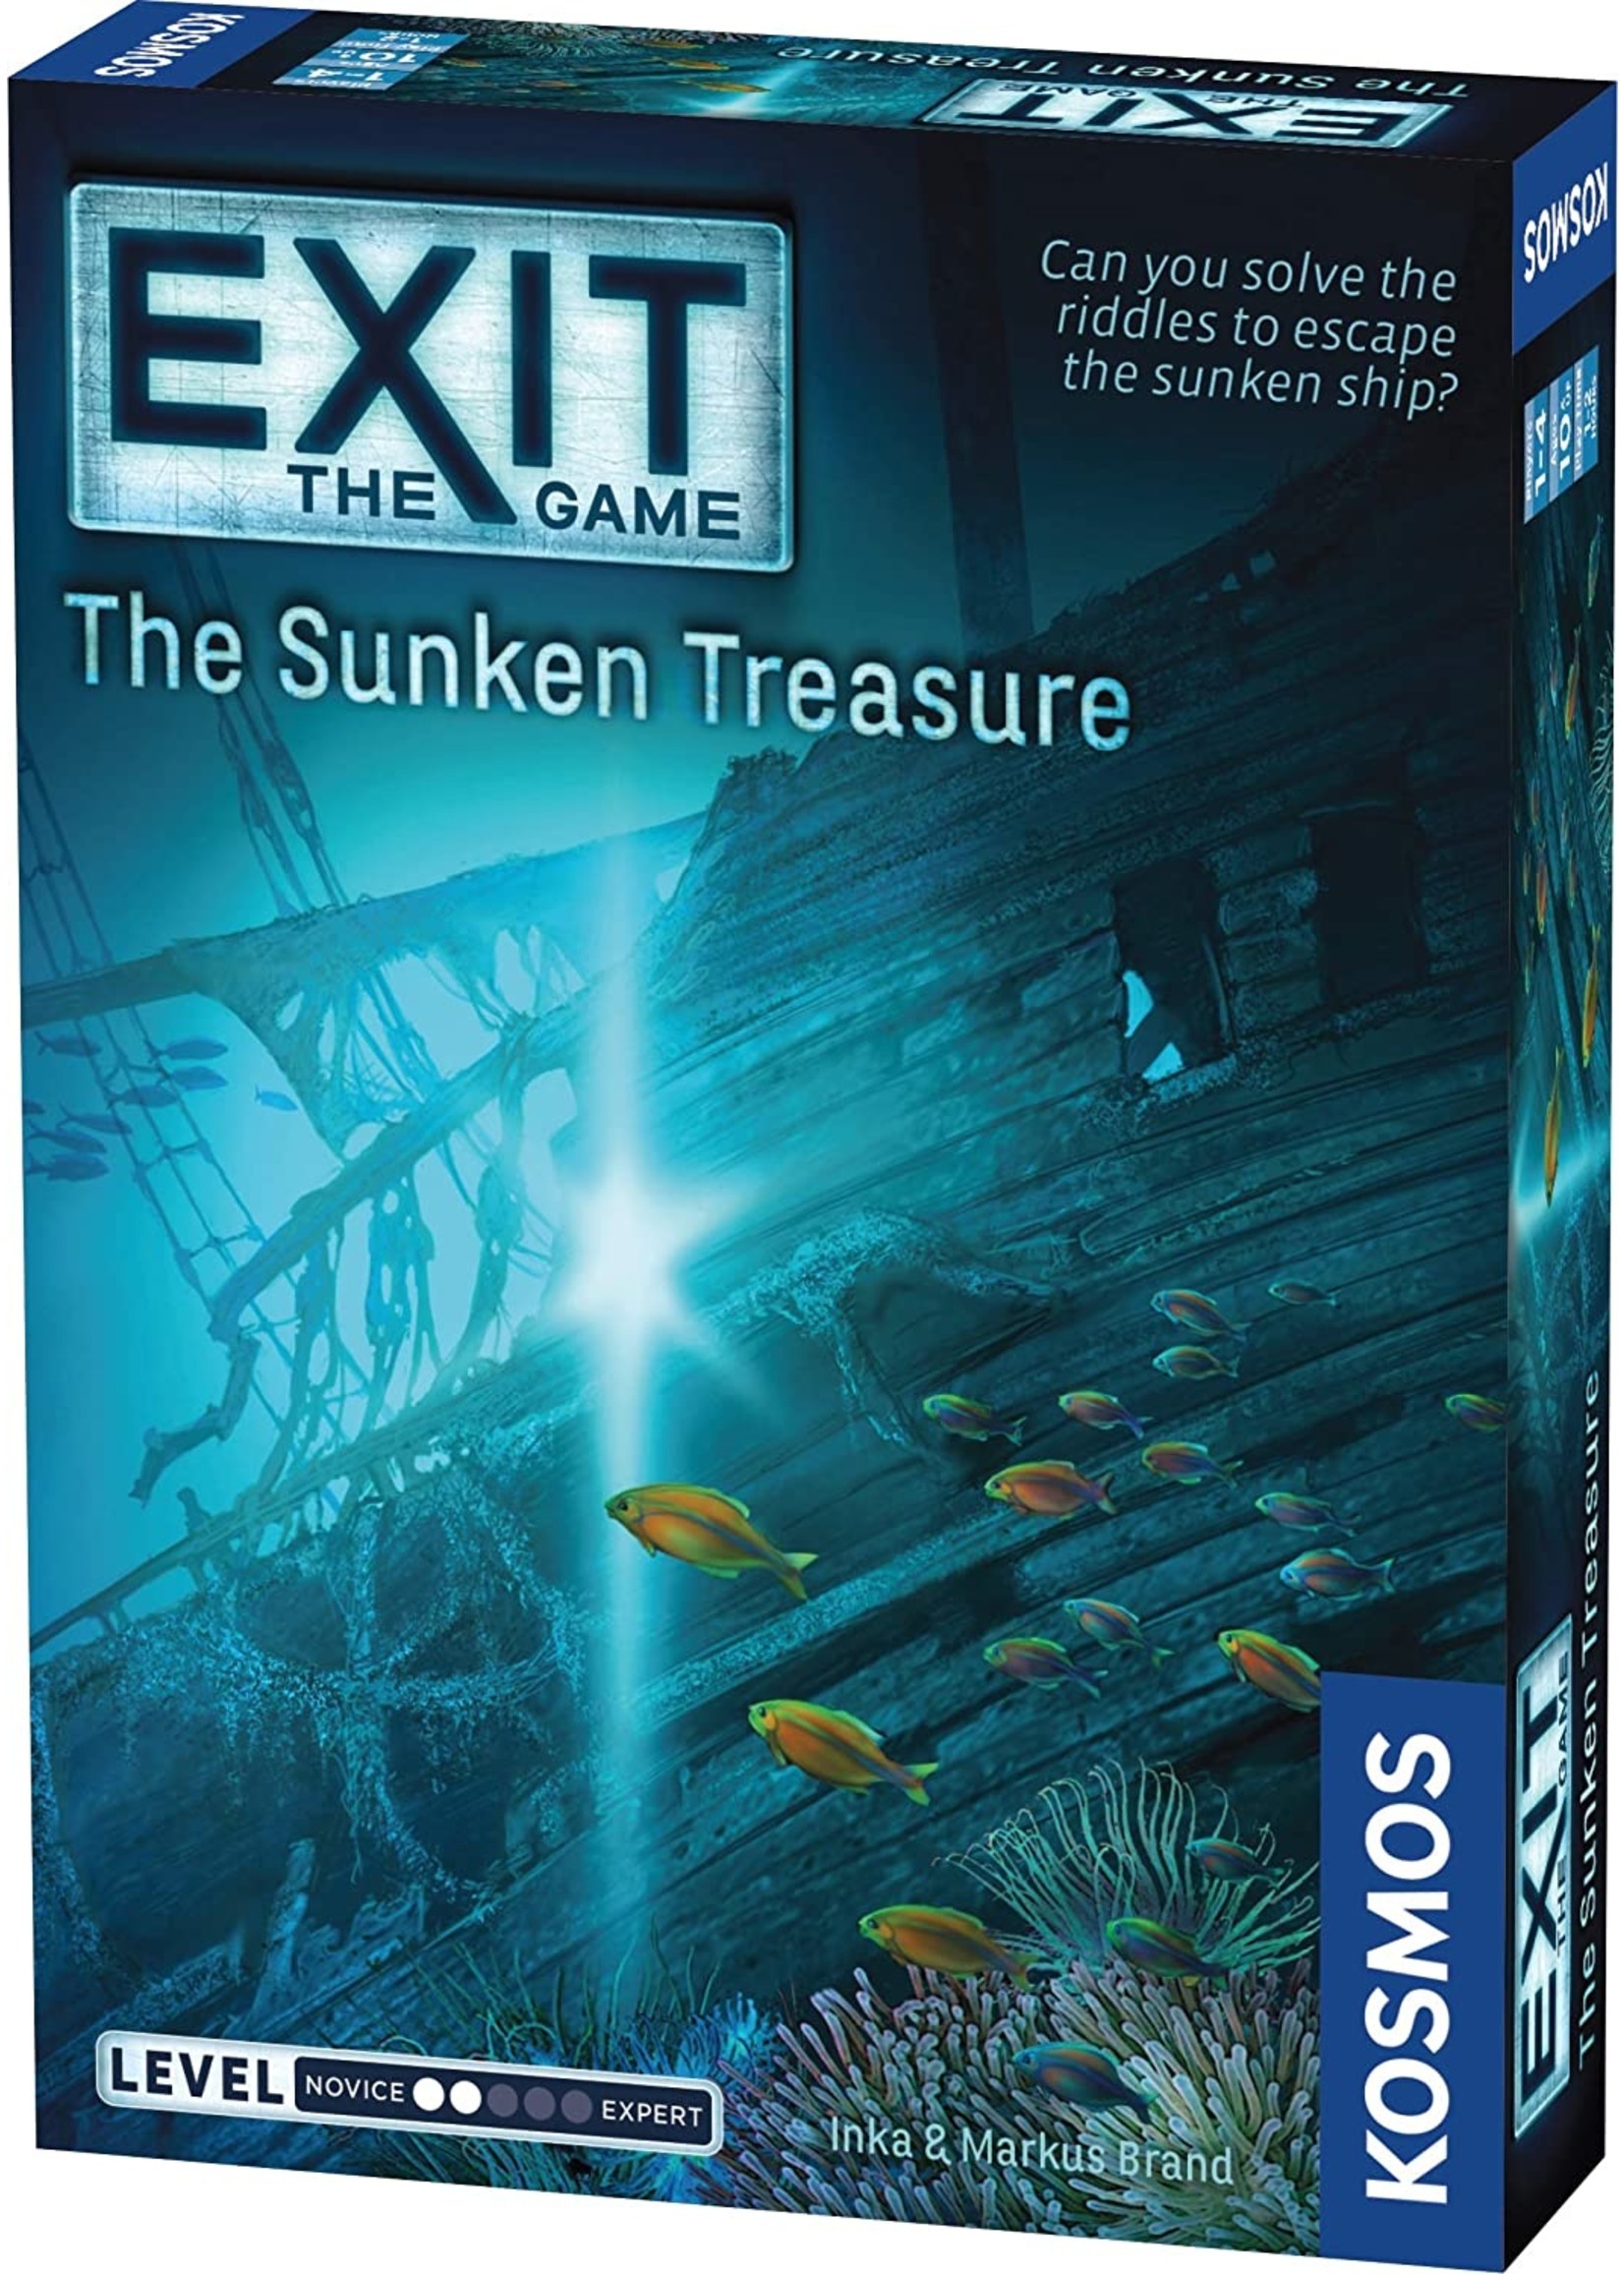 Thames & Kosmos Exit: The Sunken Treasure